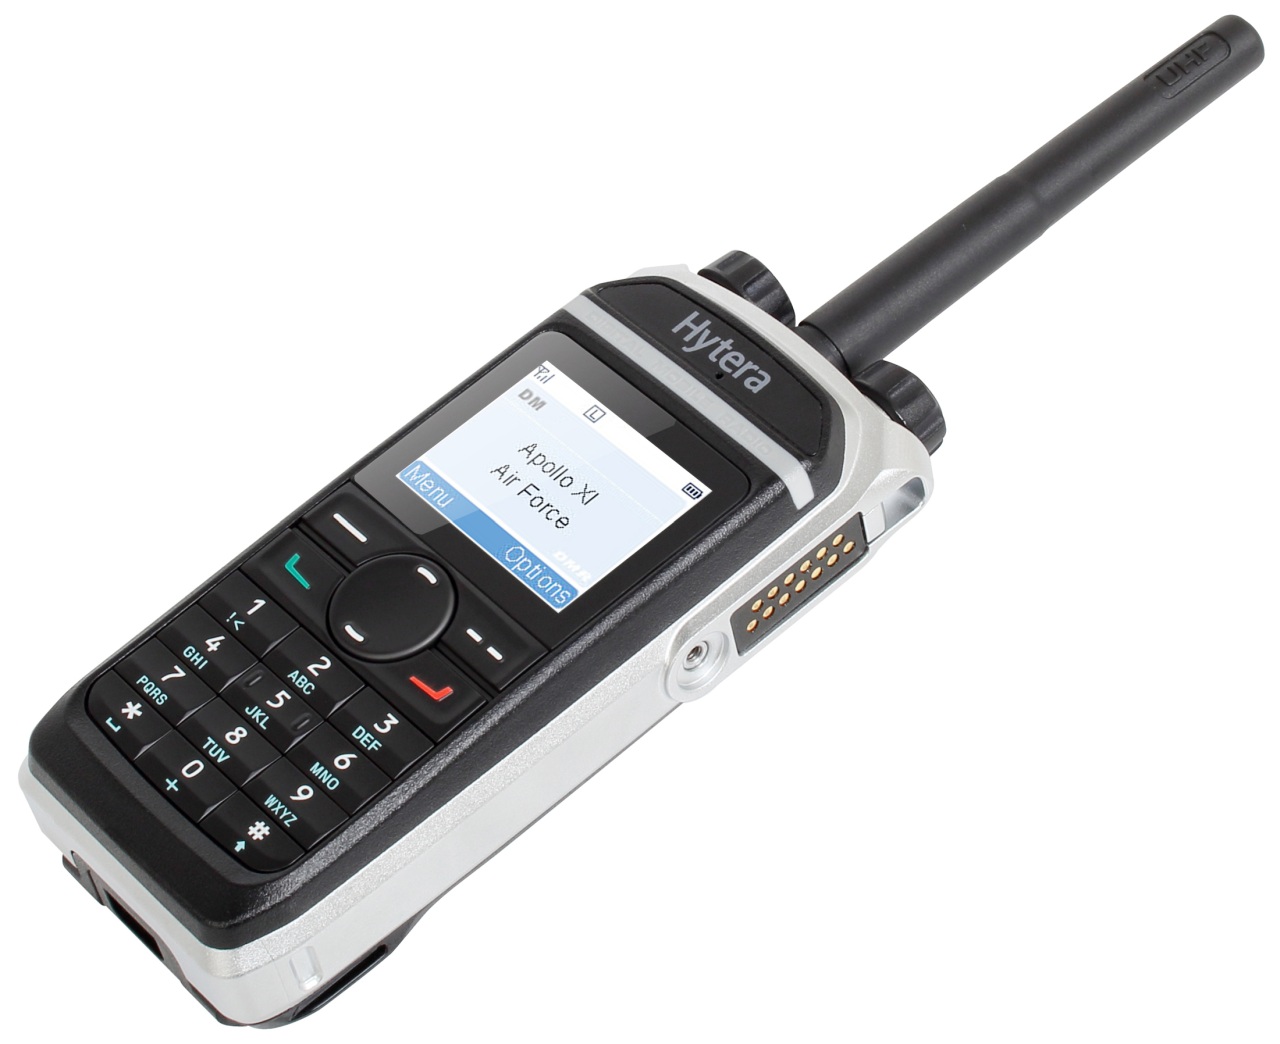 PD685 DMR-Handheld Radio, VHF, with GPS, with man down alert, 40 bit encryption (ARC4) according DMRA, 128/256 bit optional